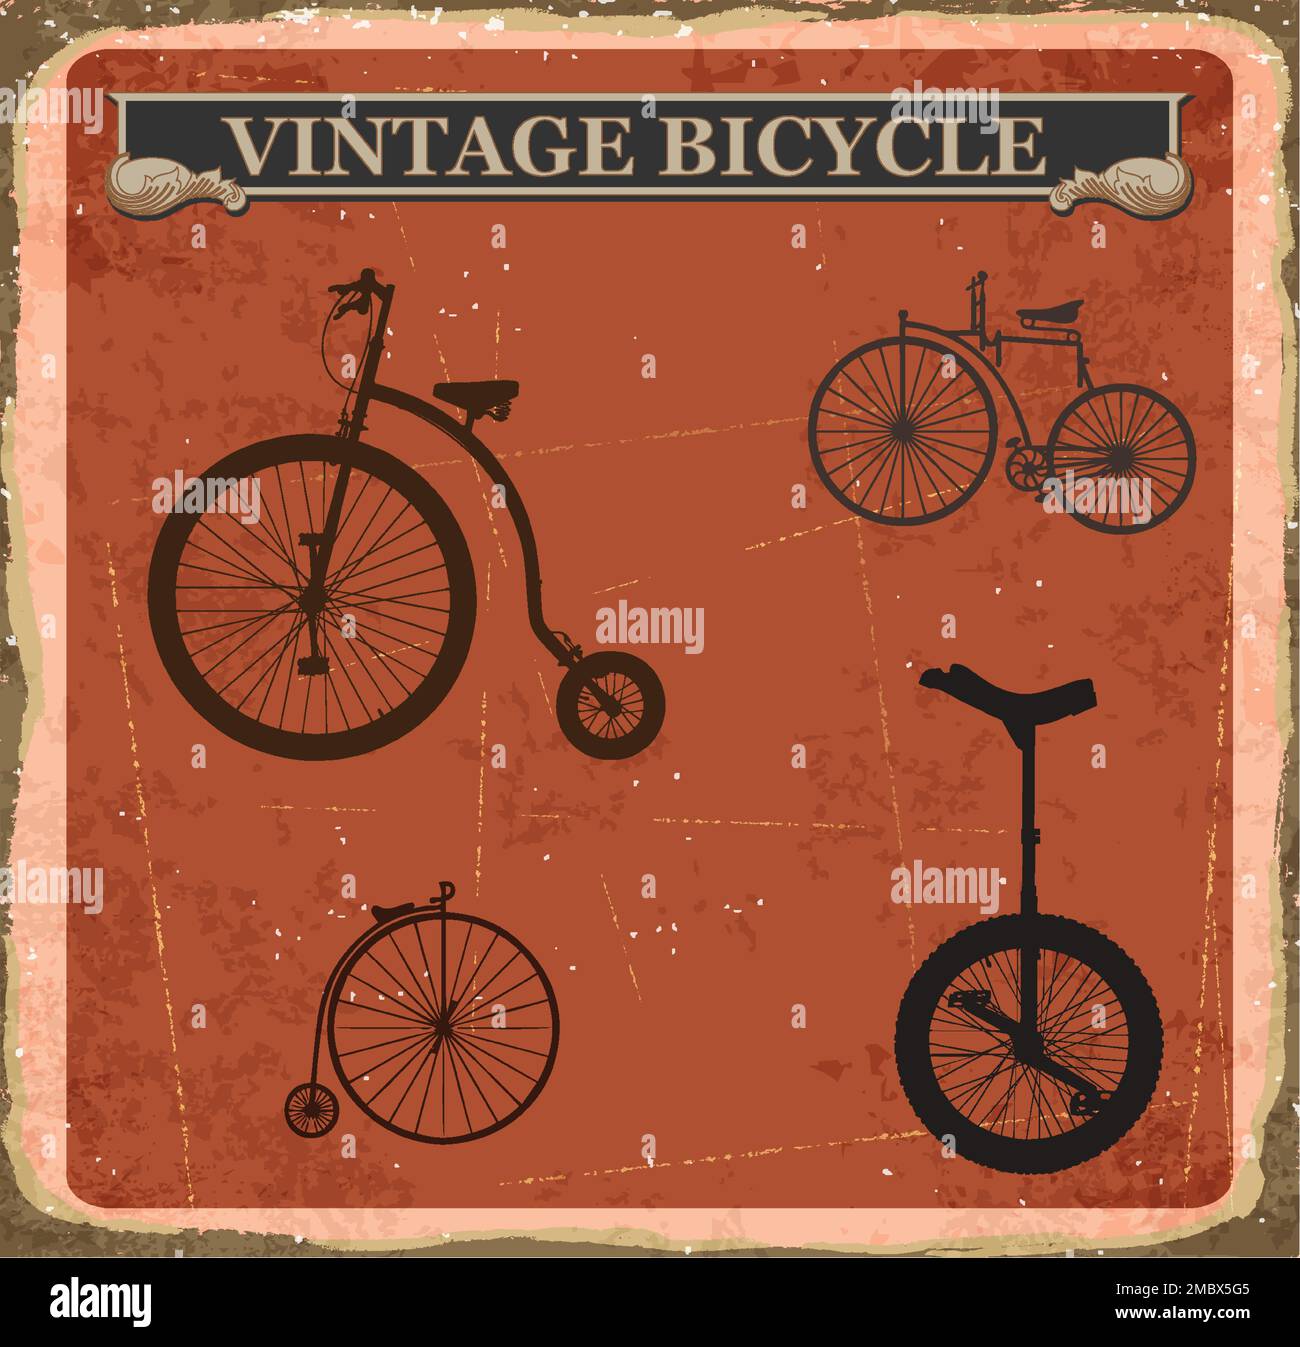 Vintage-Fahrrad-Set Mit Vier Fahrrädern. Vintage Bicycle Poster Art Stock Vektor